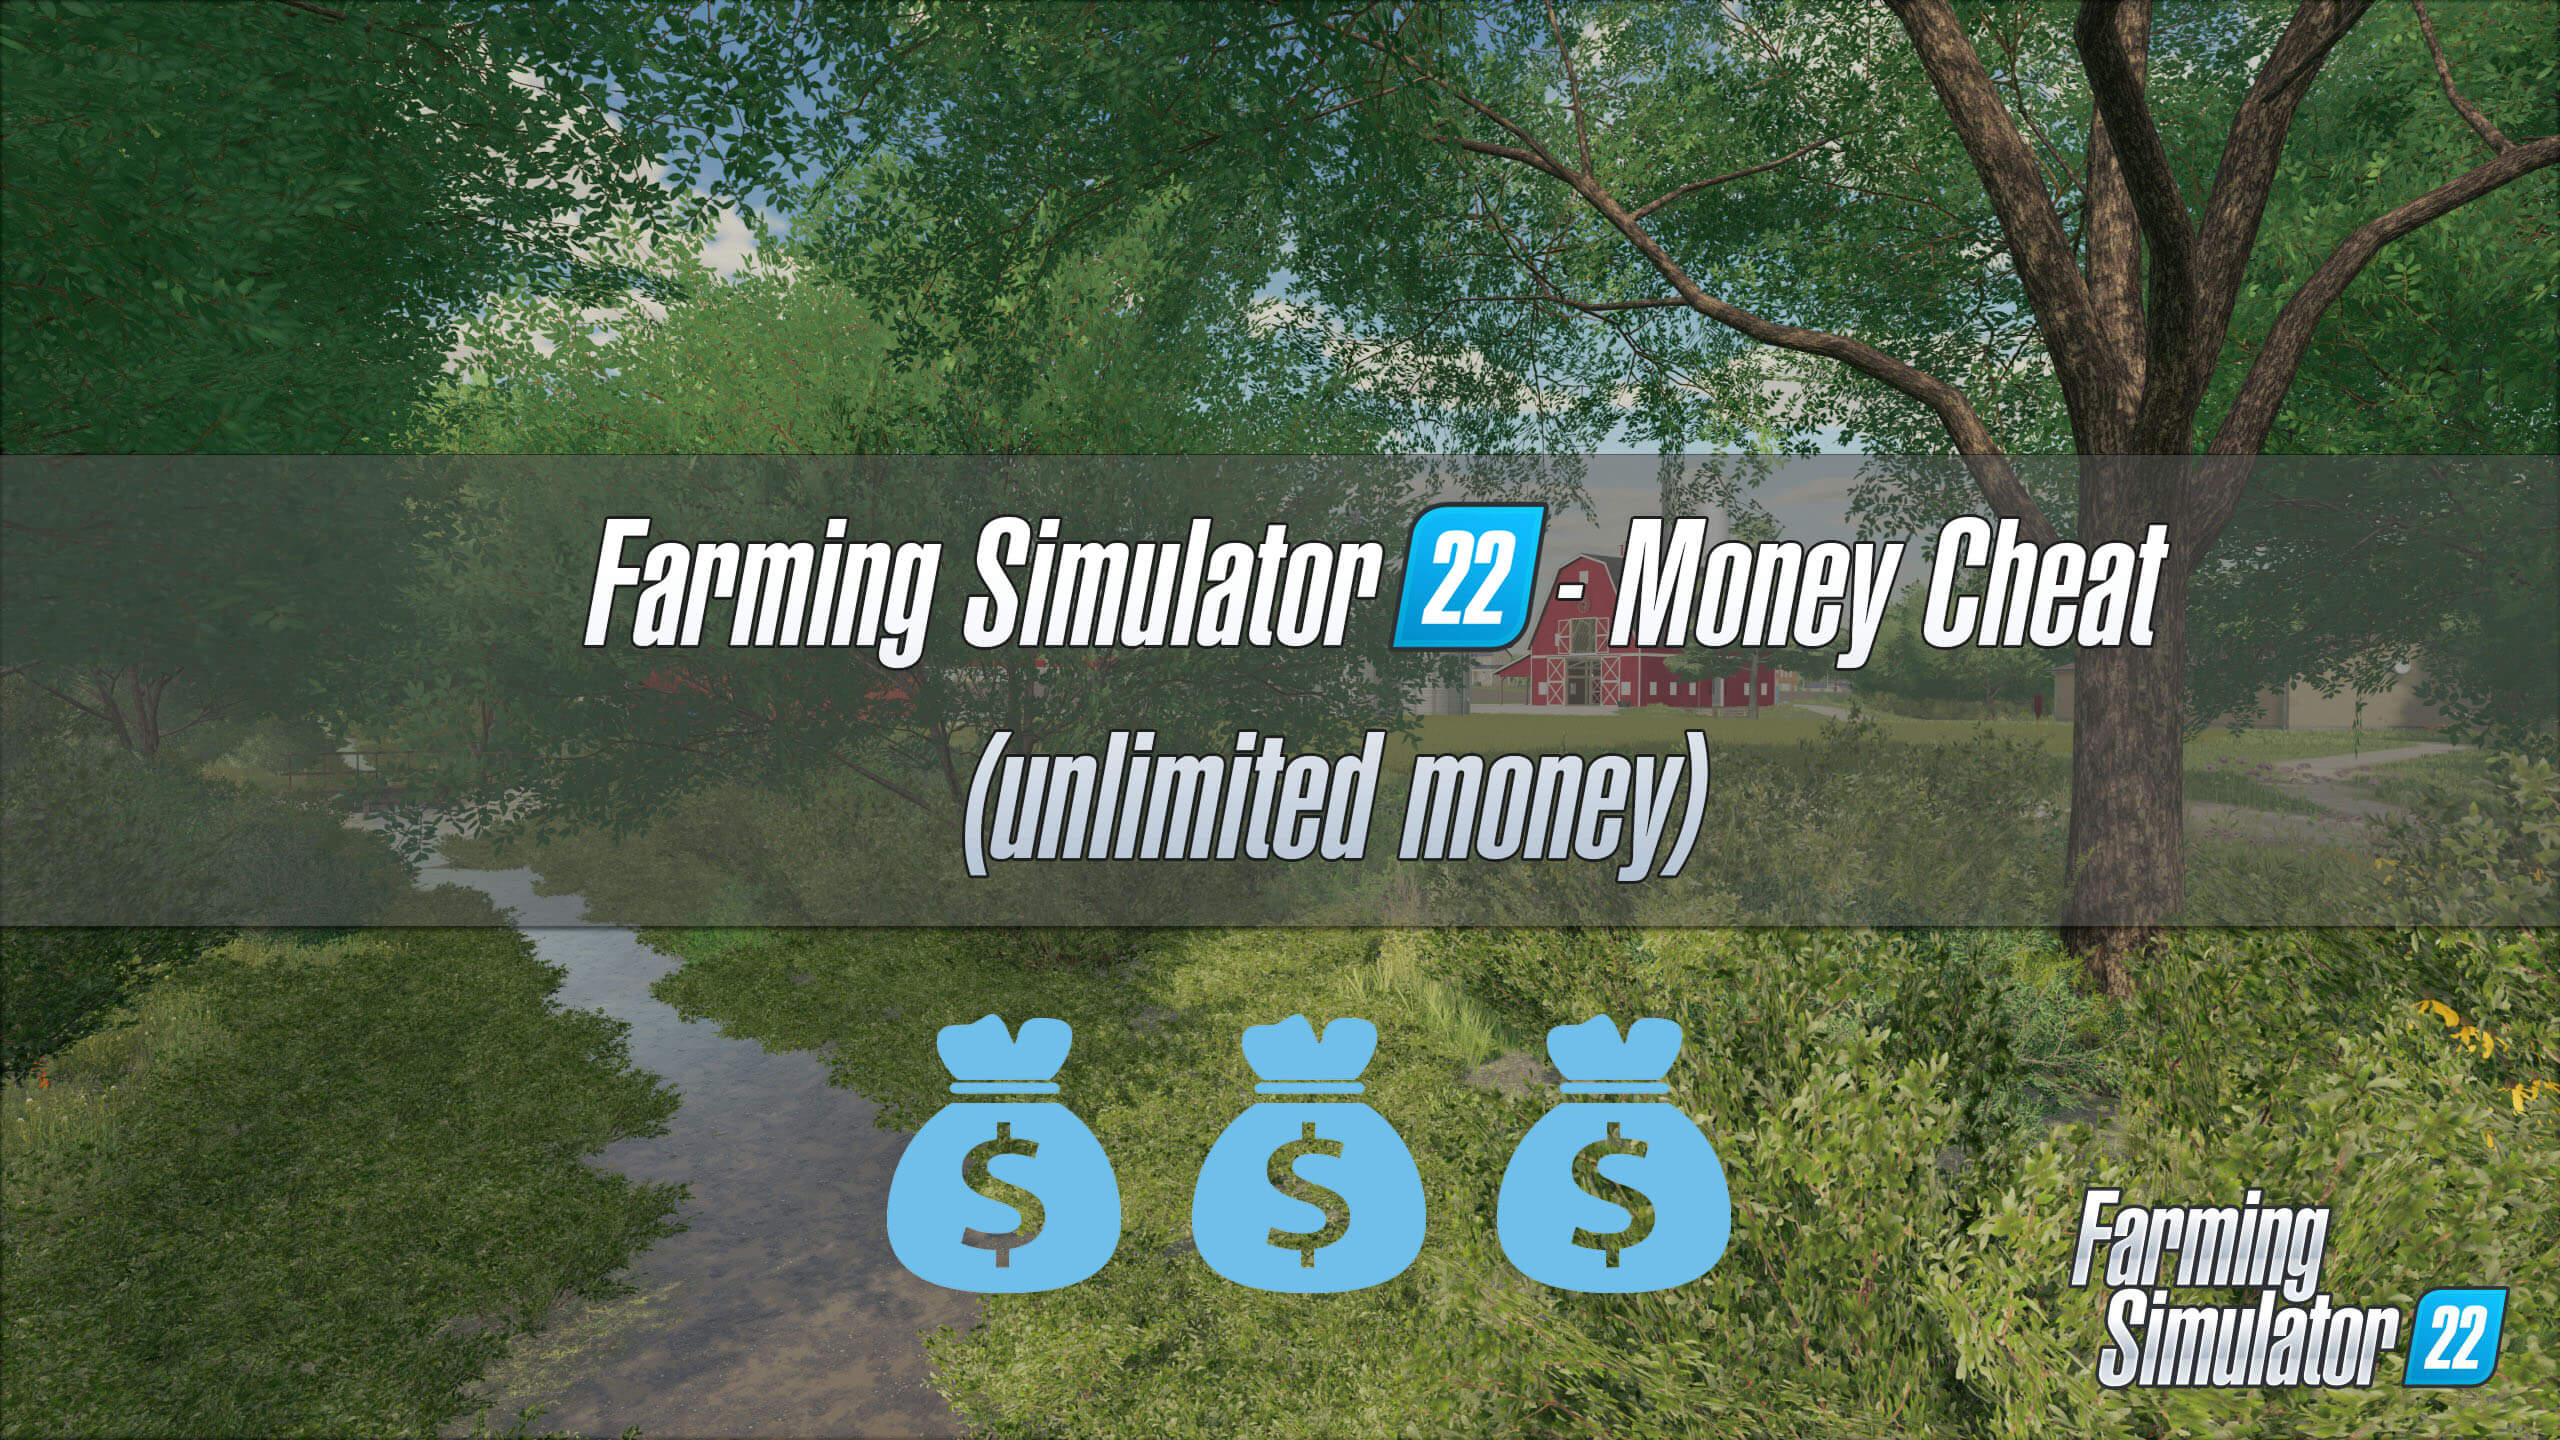 farm simulator 22 mods ps4